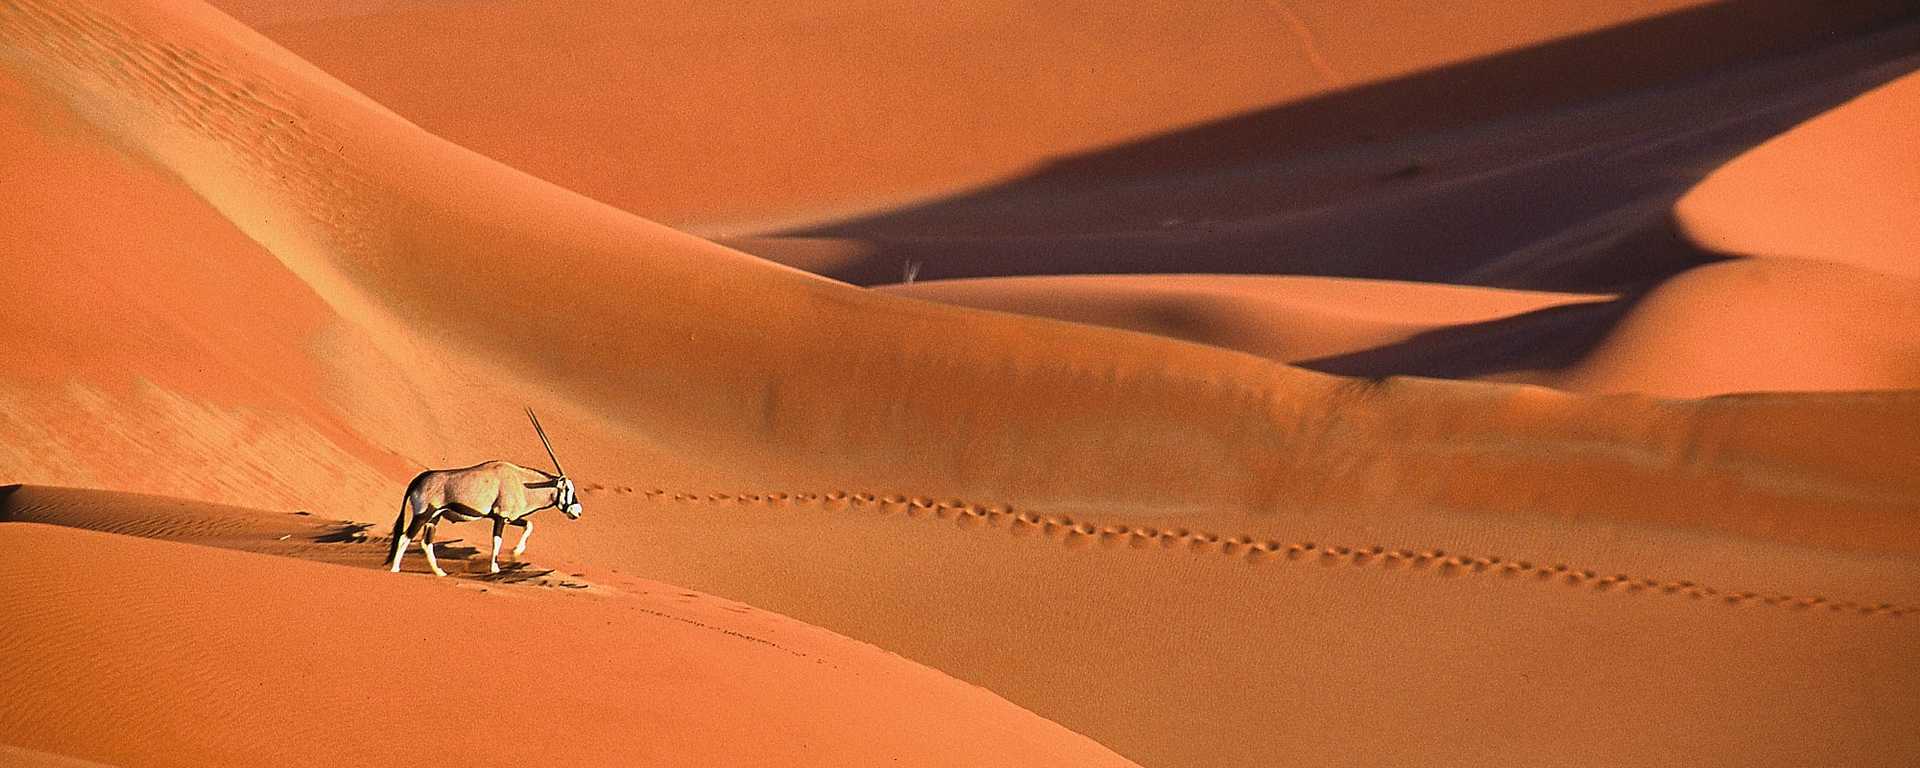 Oryx crossing sand dunes in the Namib Desert, Namibia